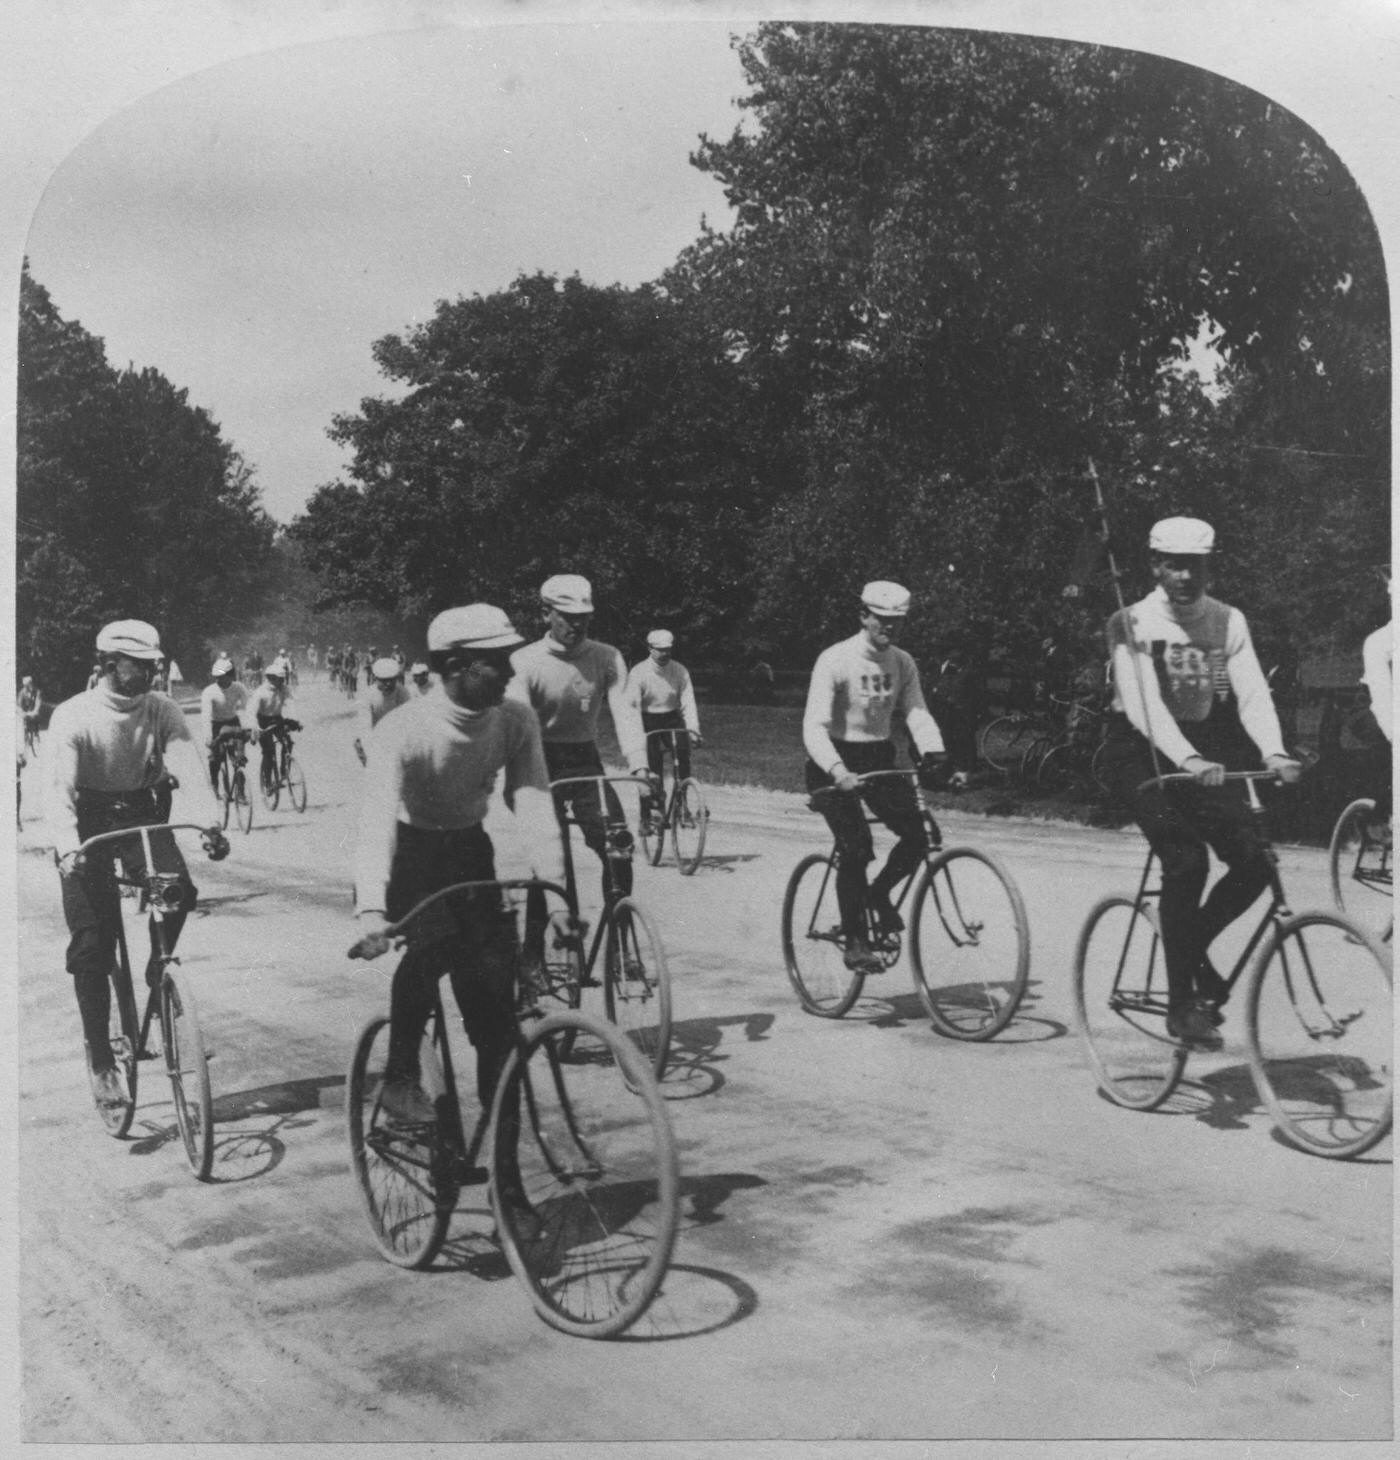 Central Park Cycle Parade: Young Men Participating In A Bicycle Parade In Central Park, New York City, 1895.